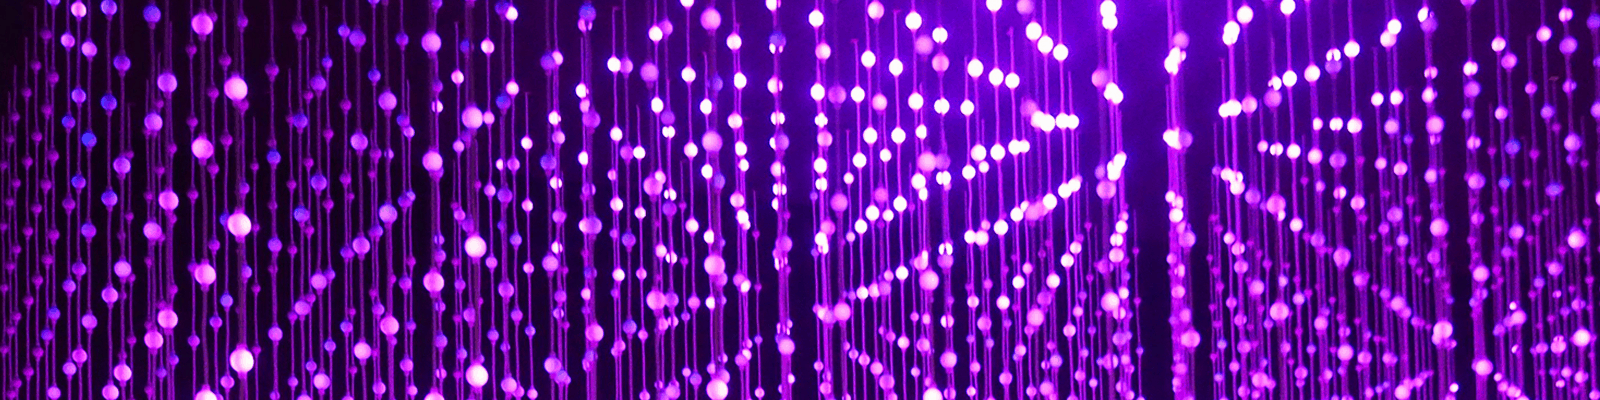 purple fairy lights in vertical rows